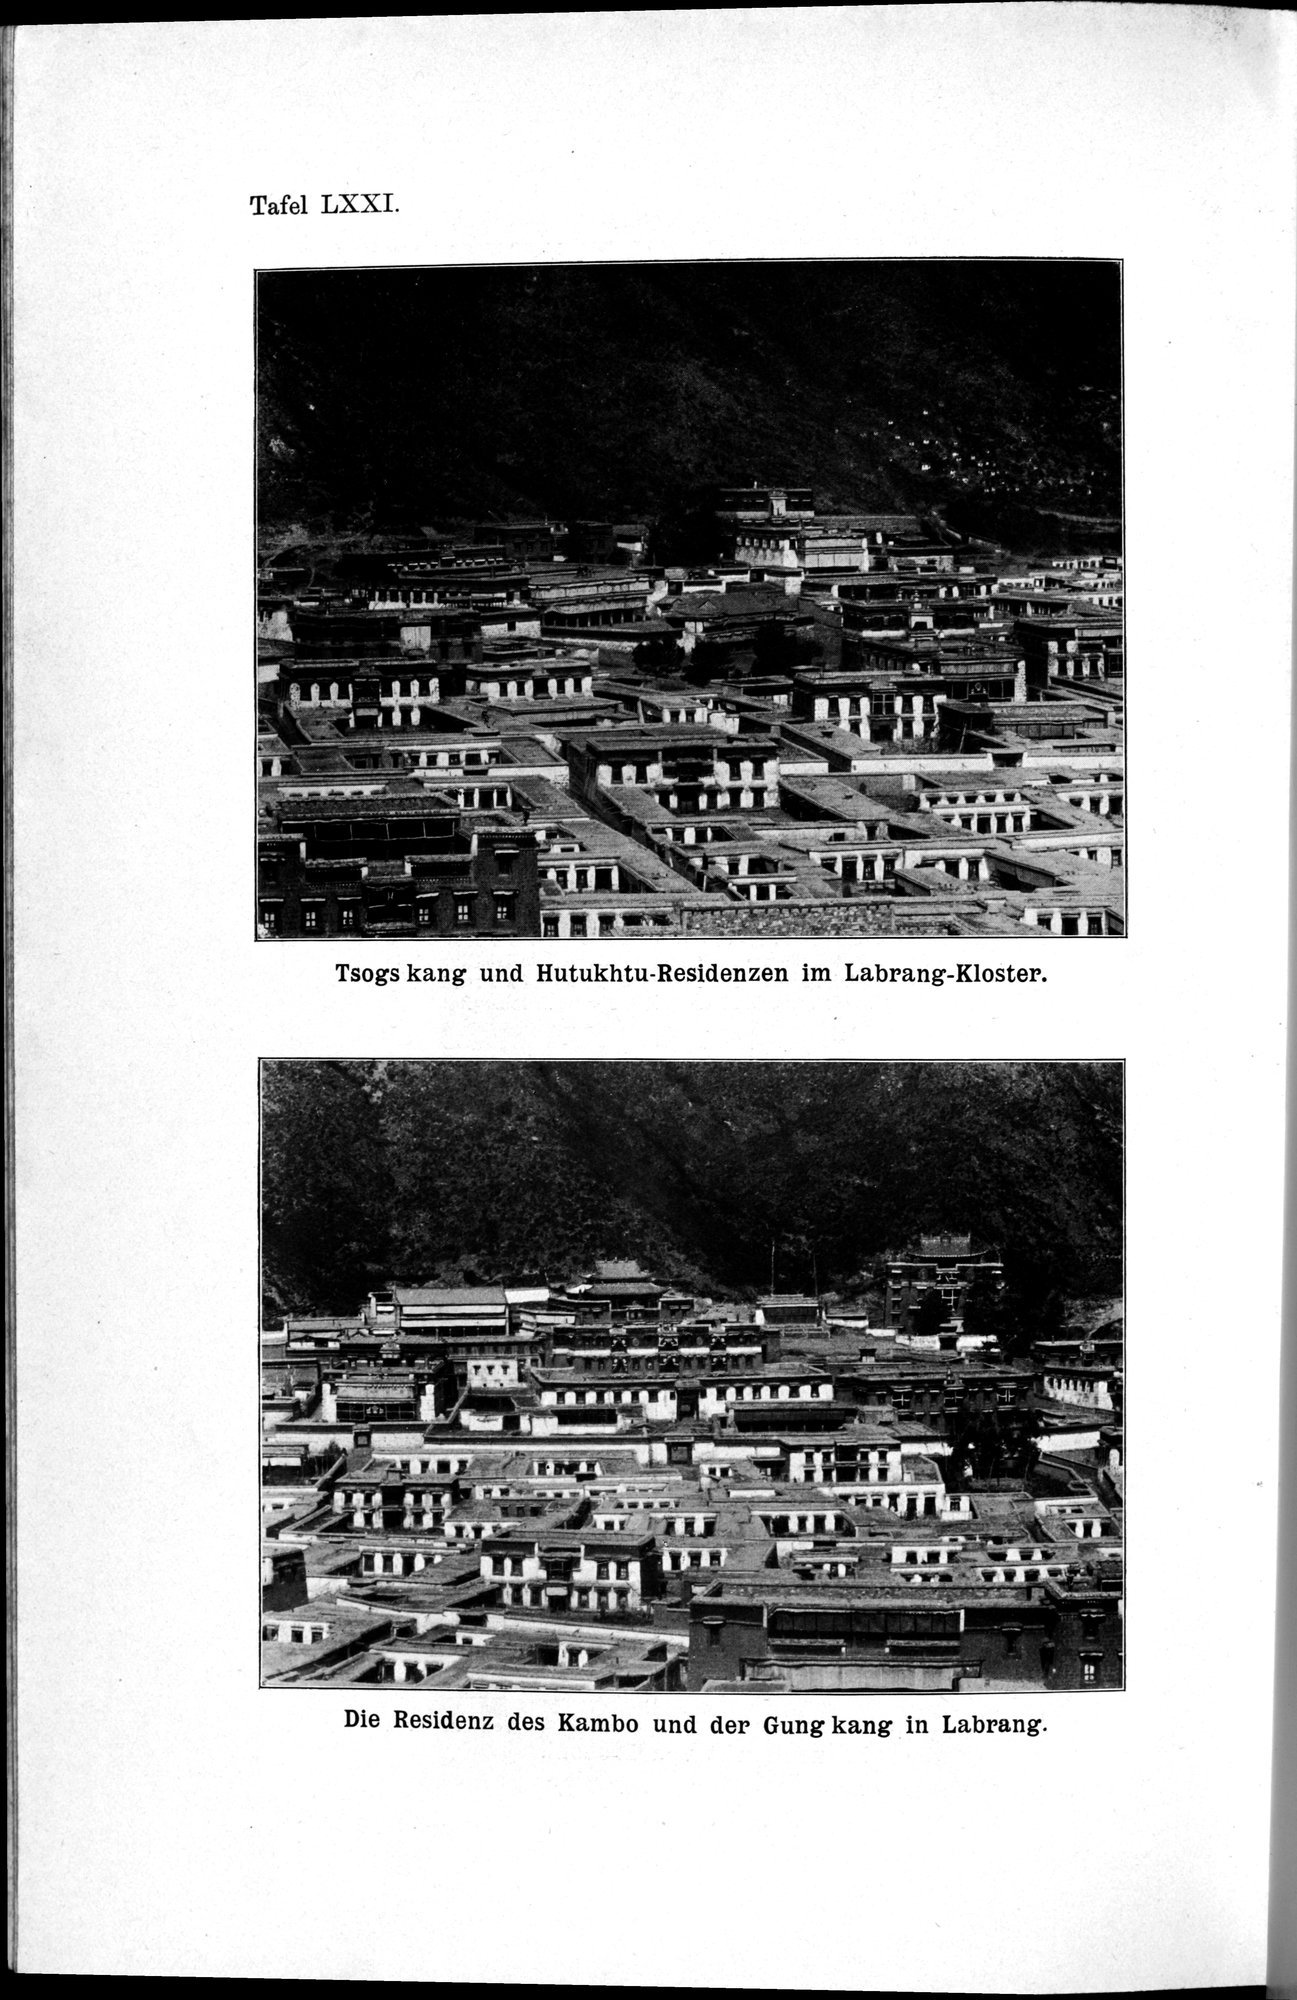 Meine Tibetreise : vol.2 / Page 394 (Grayscale High Resolution Image)